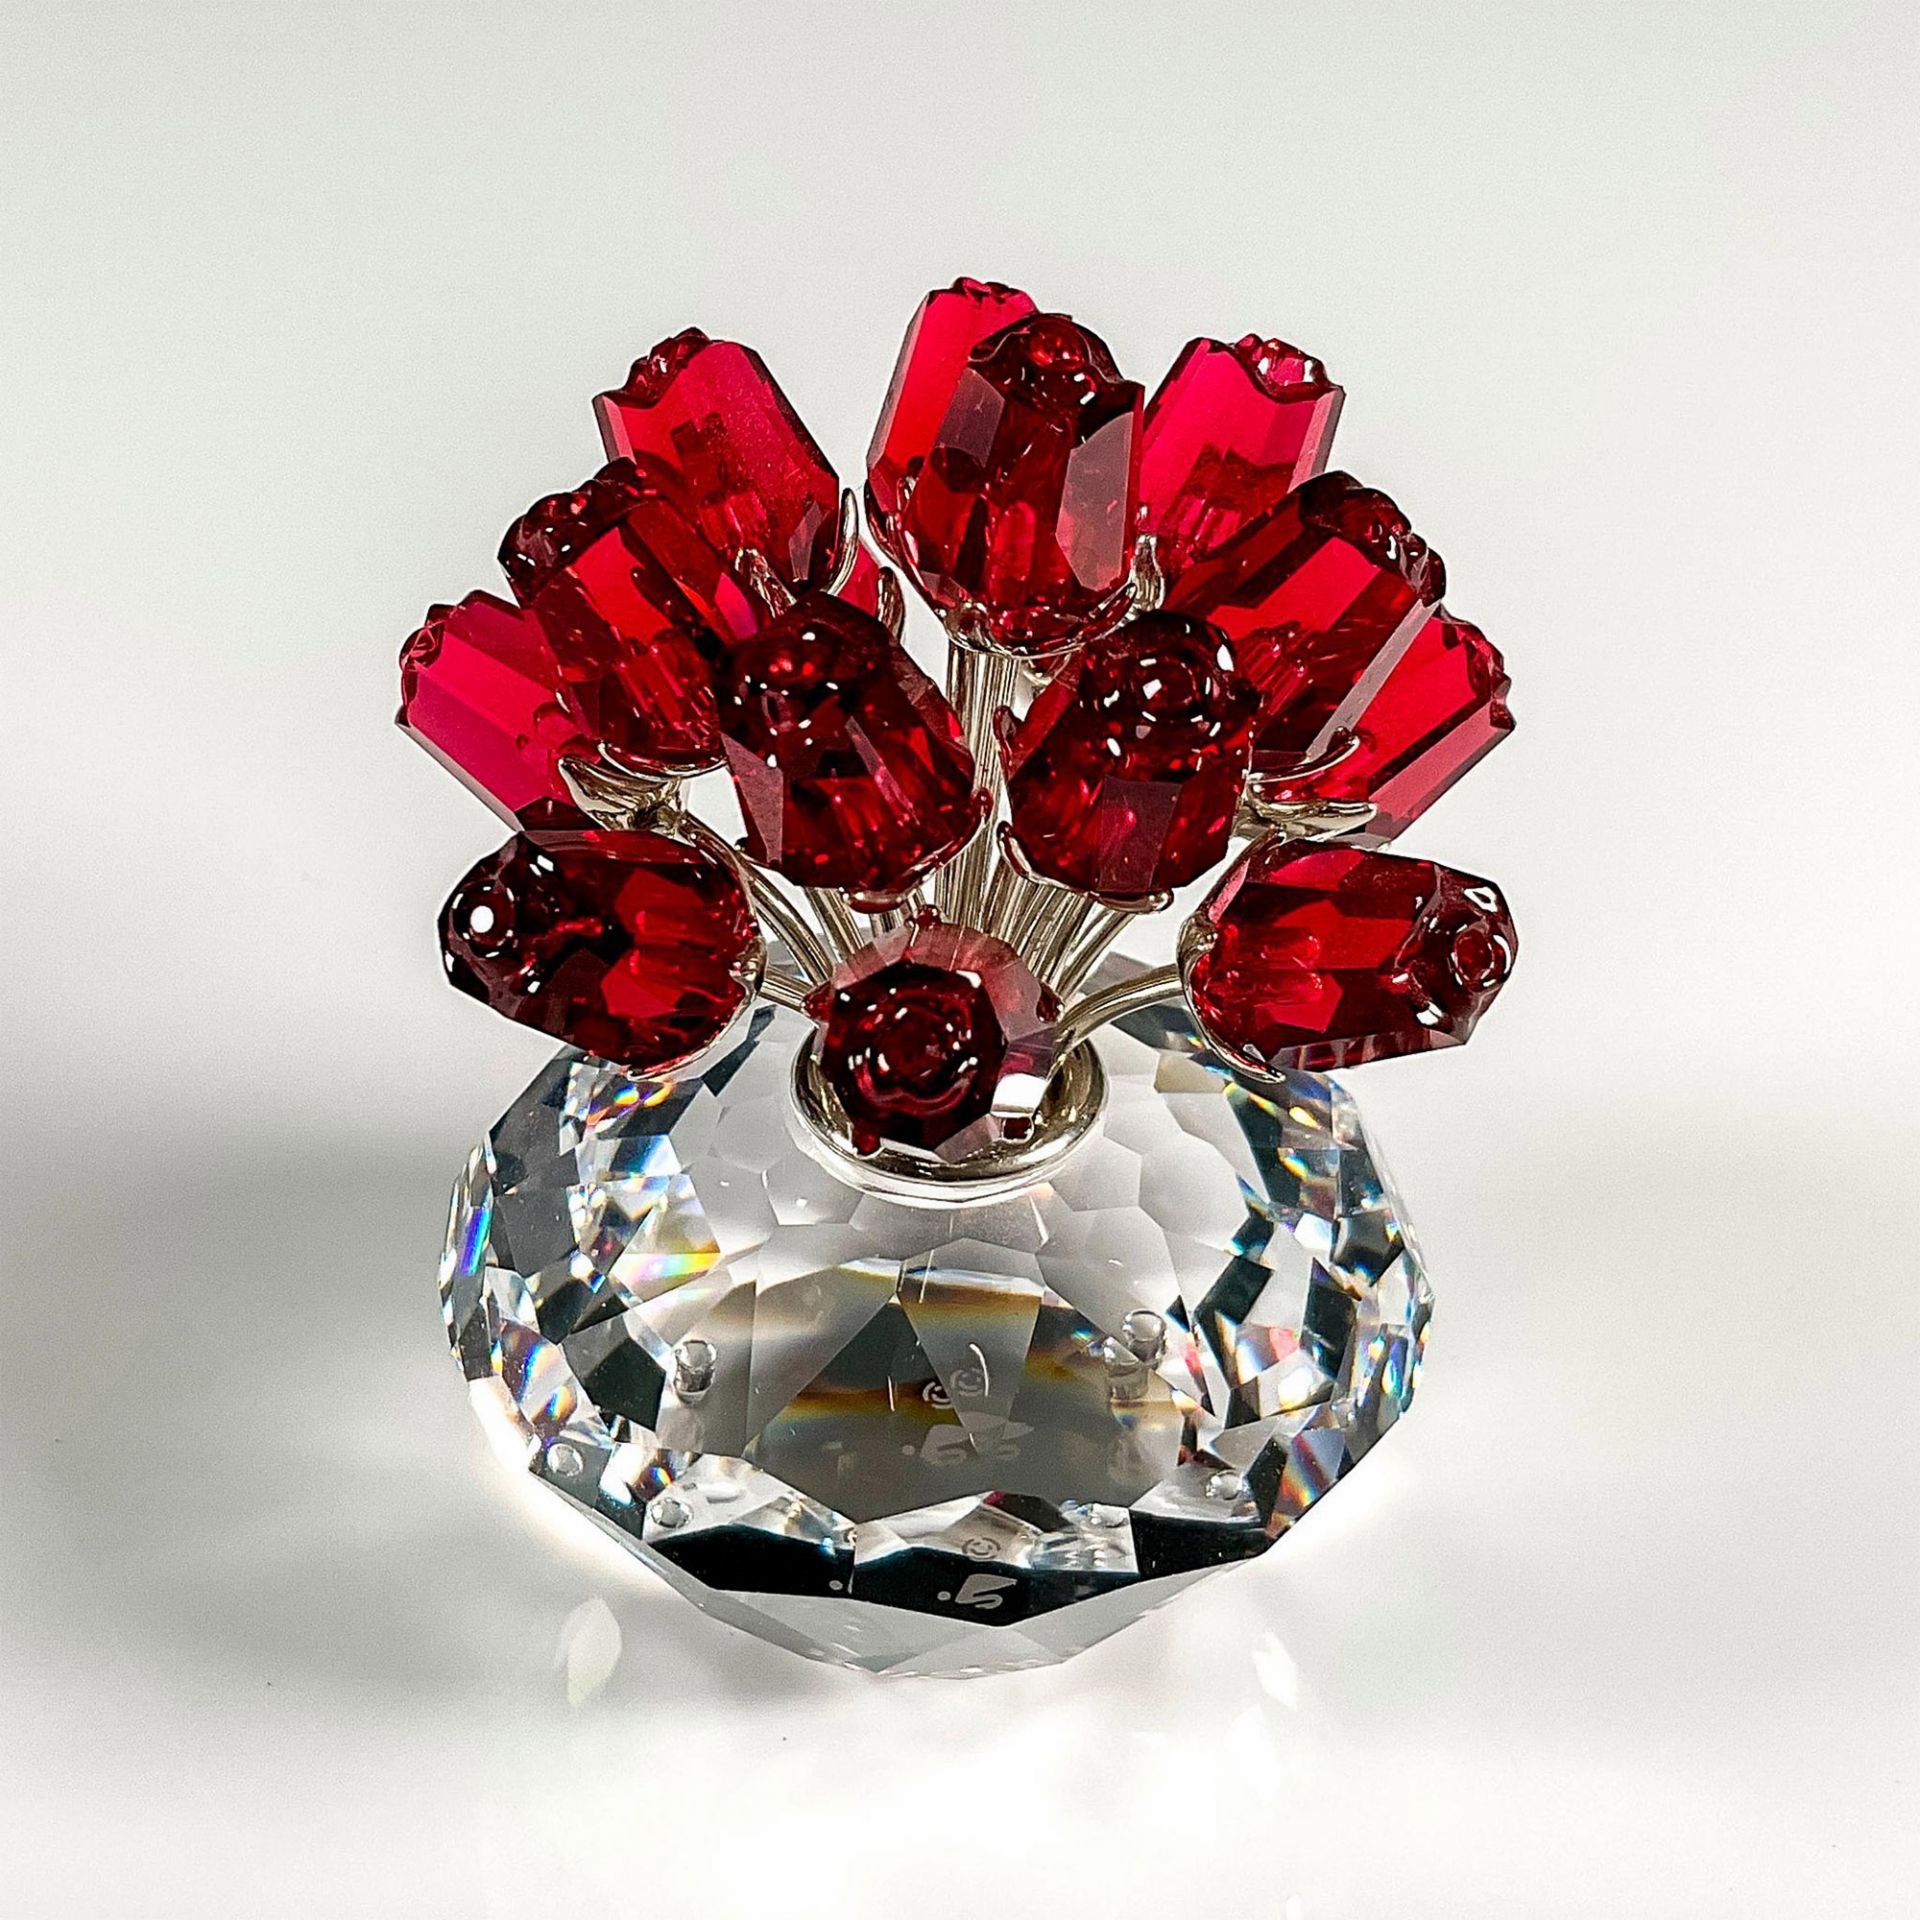 Swarovski Crystal Figurine, Vase of Roses - Image 2 of 4